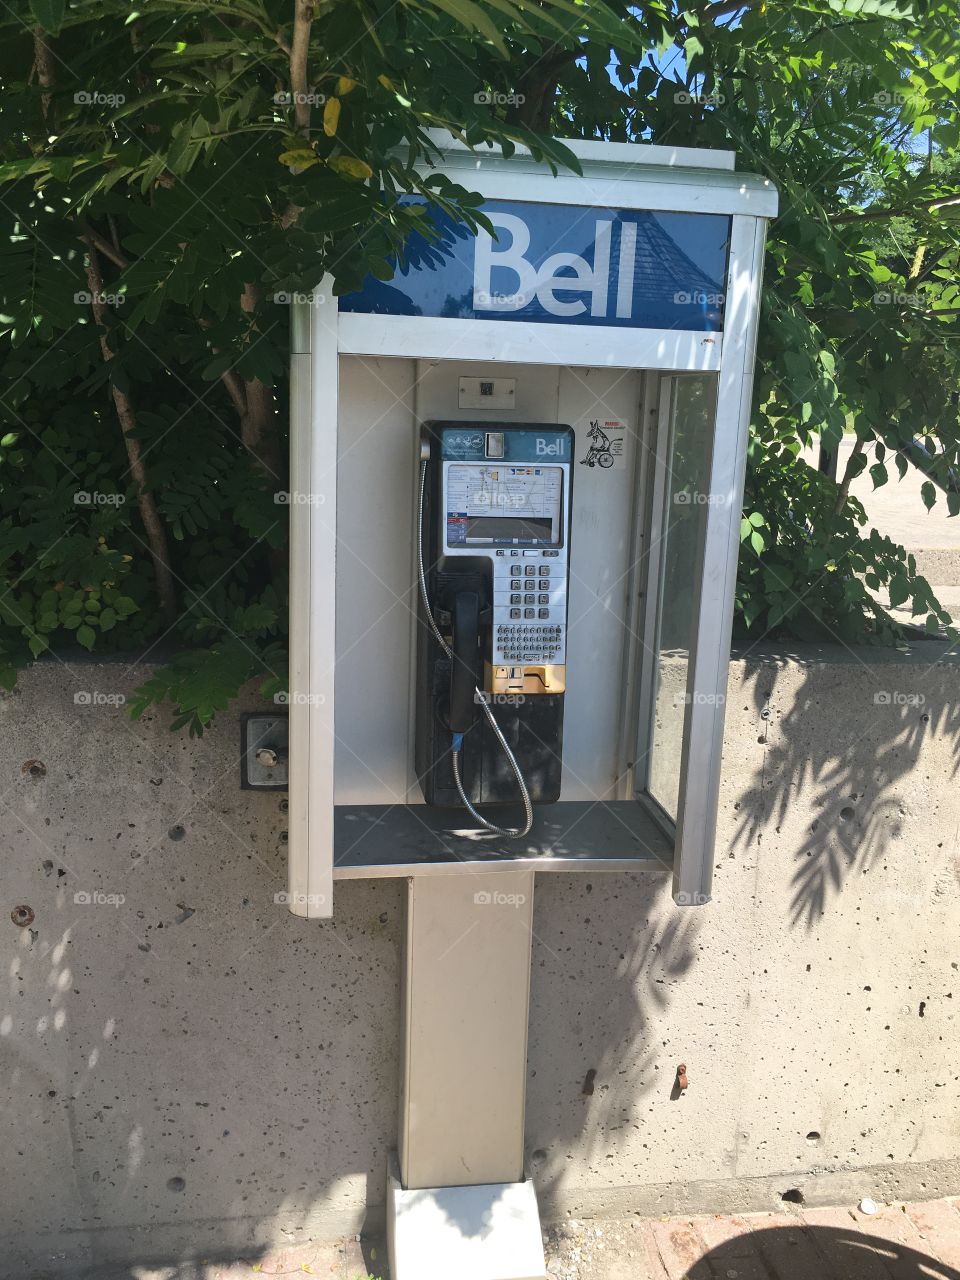 Niagara Falls, Canada - phone booth
